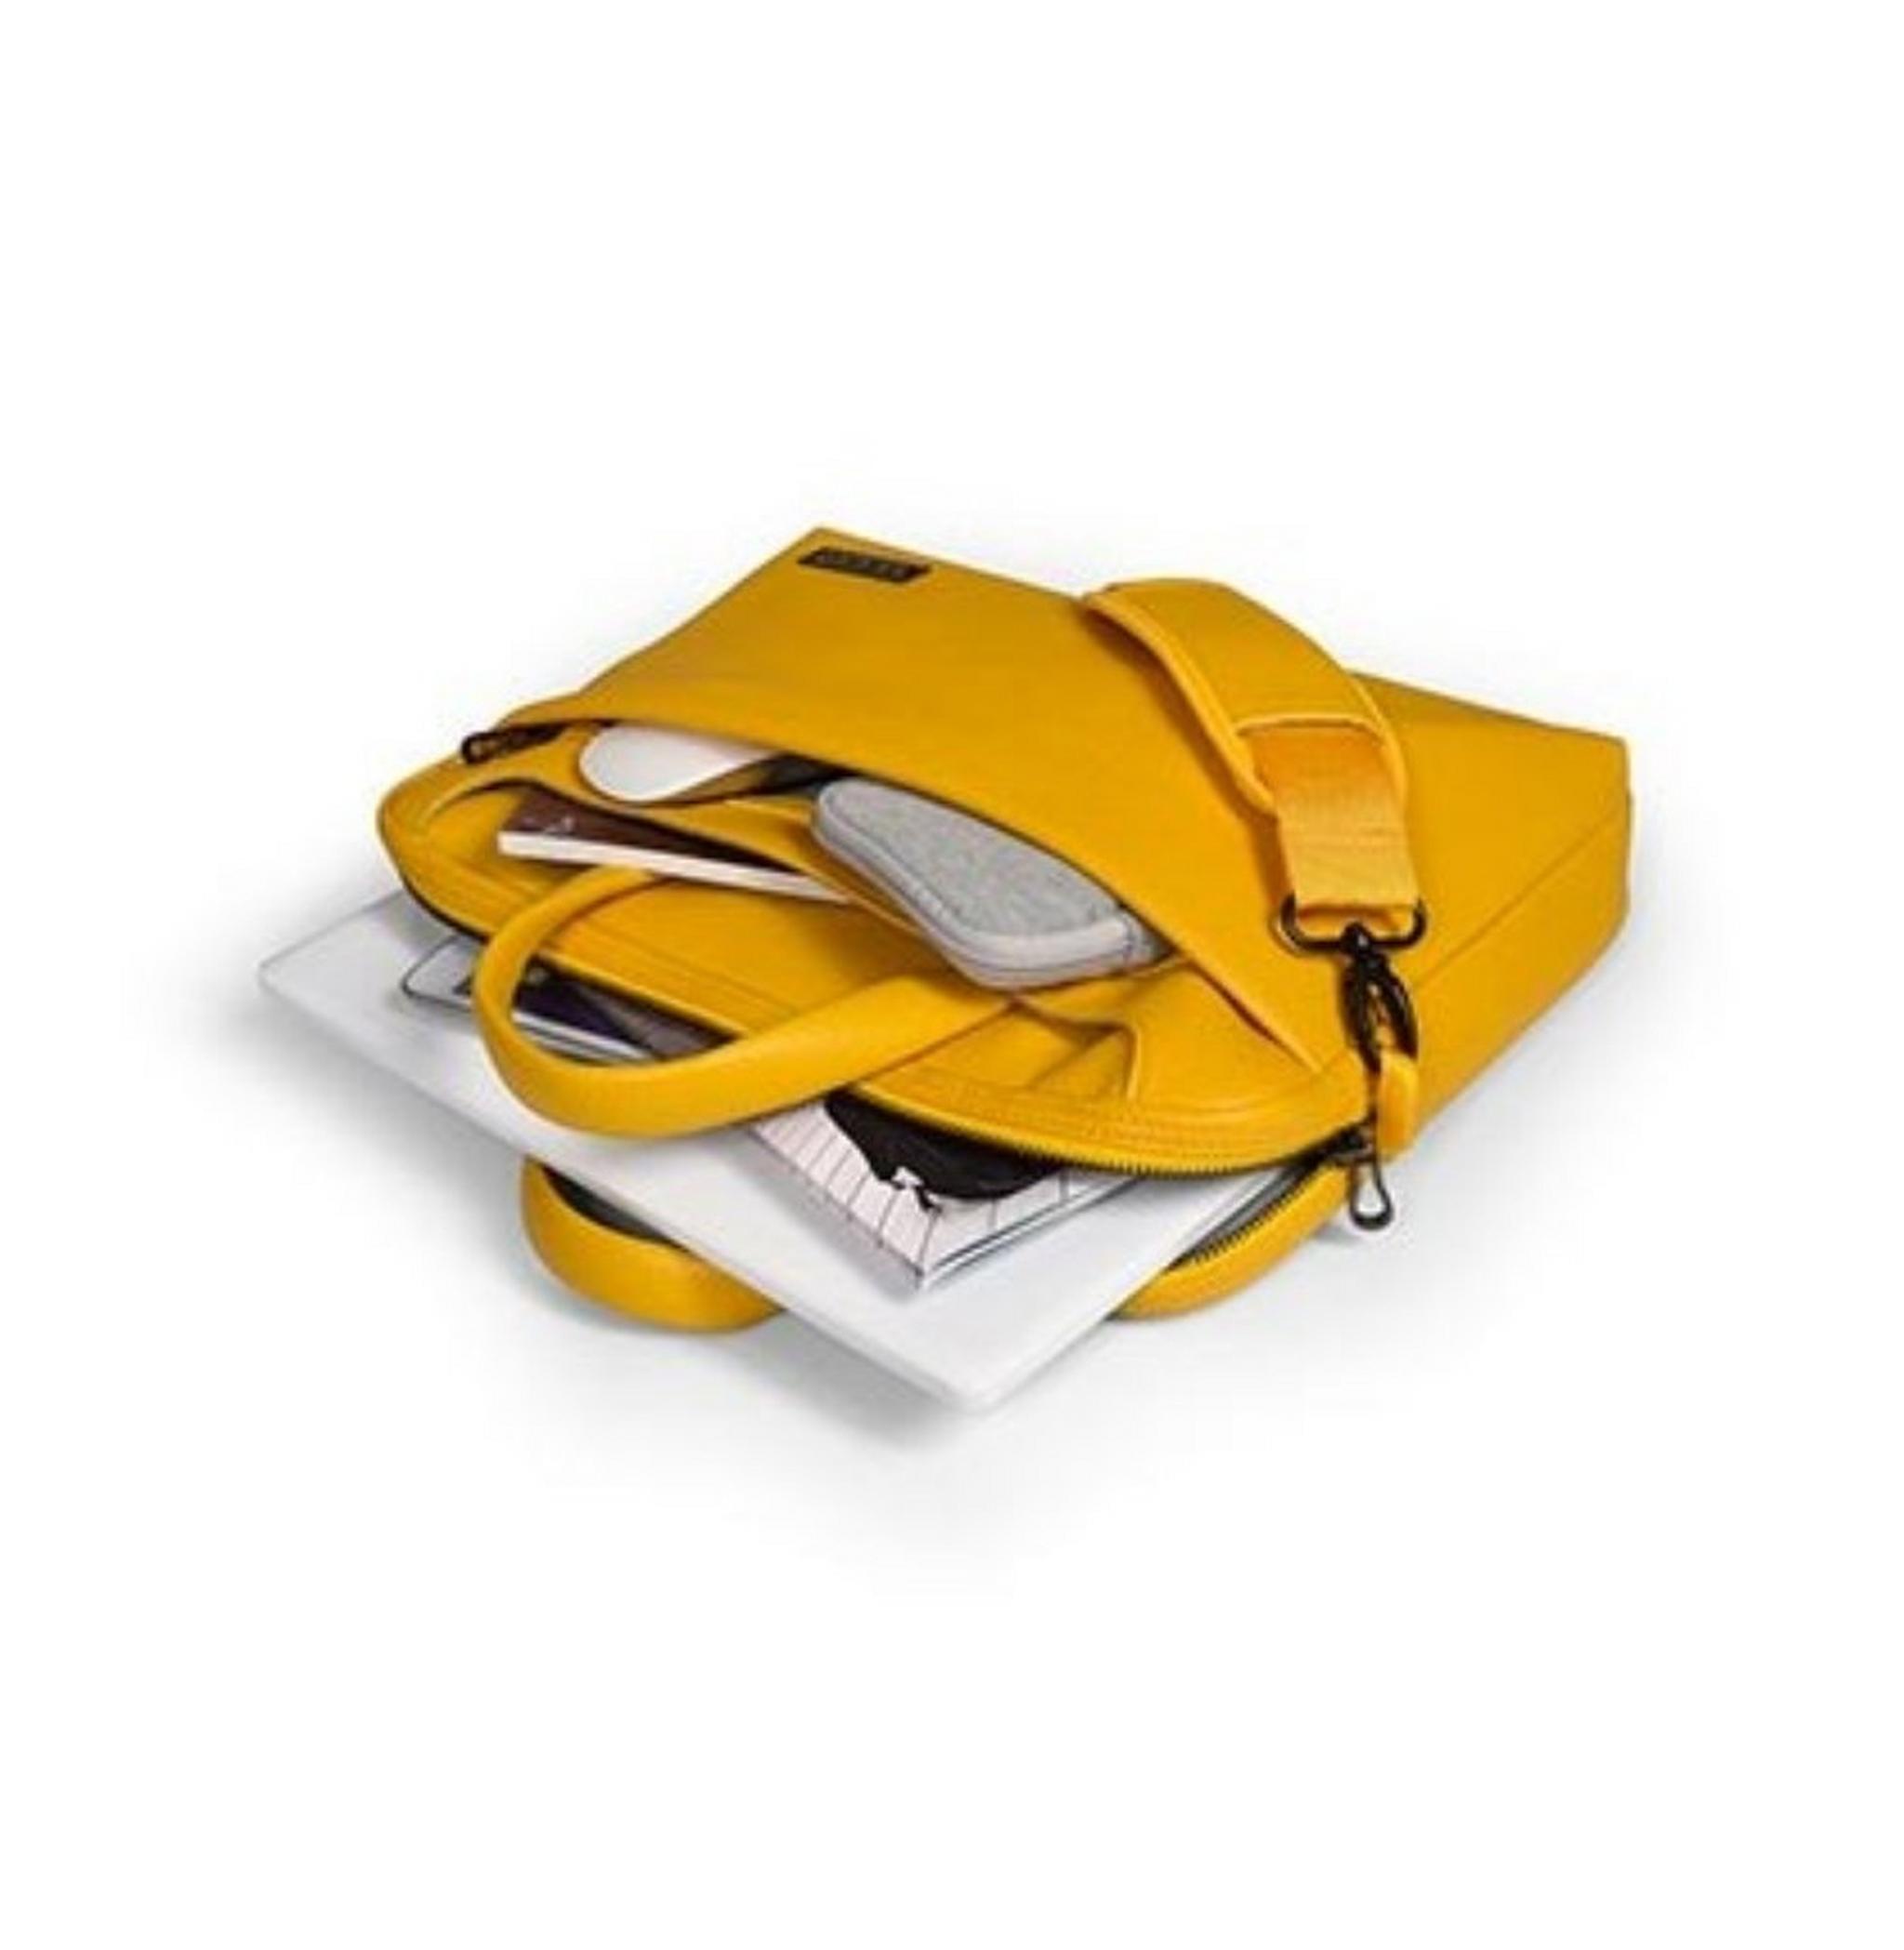 Port Zurich Toploader For 13/14-inch Laptop – Yellow